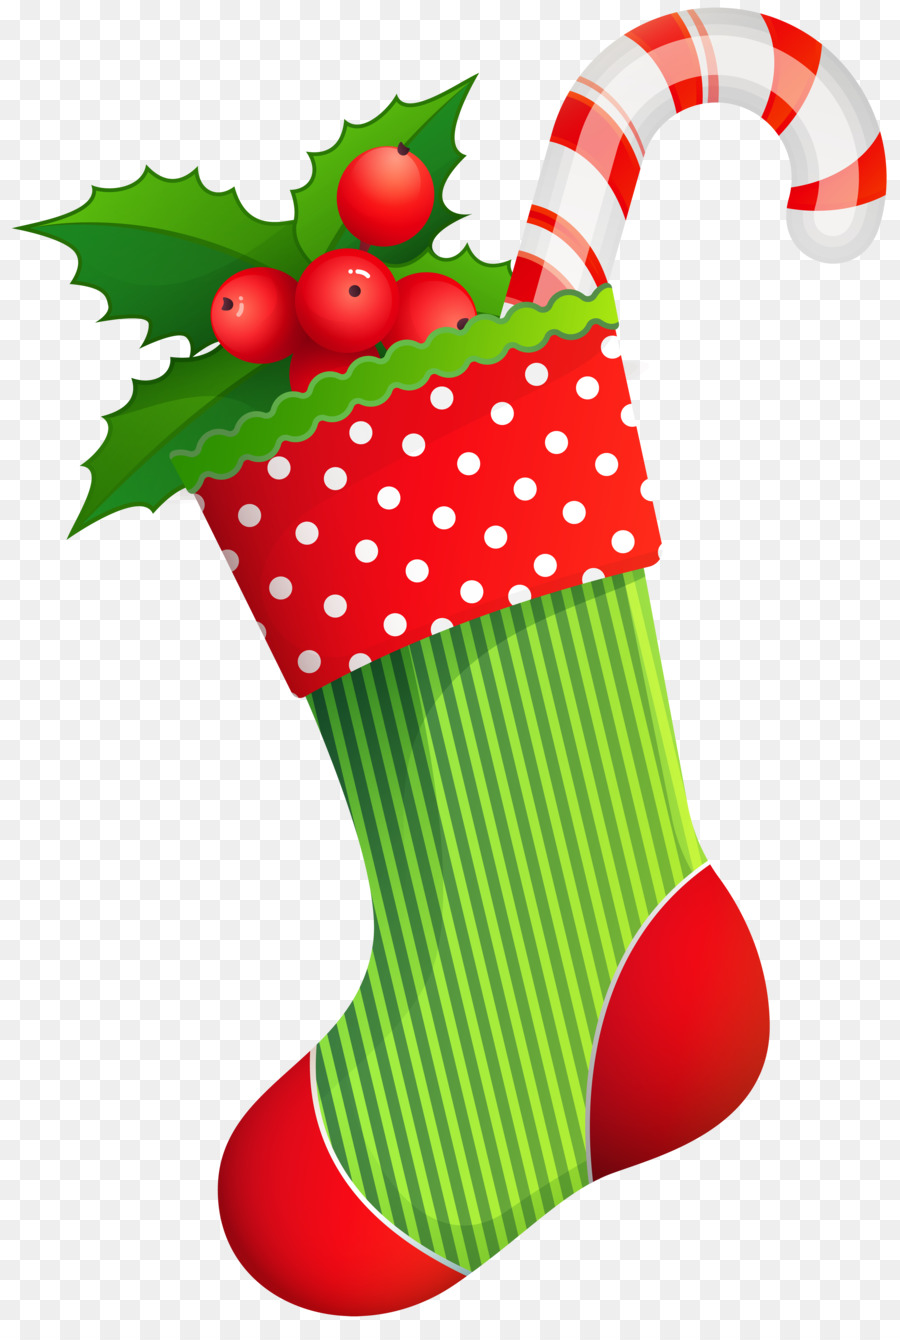 Christmas Stockings Christmas ornament Christmas decoration Clip art - igloo png download - 5444*8000 - Free Transparent Christmas Stockings png Download.